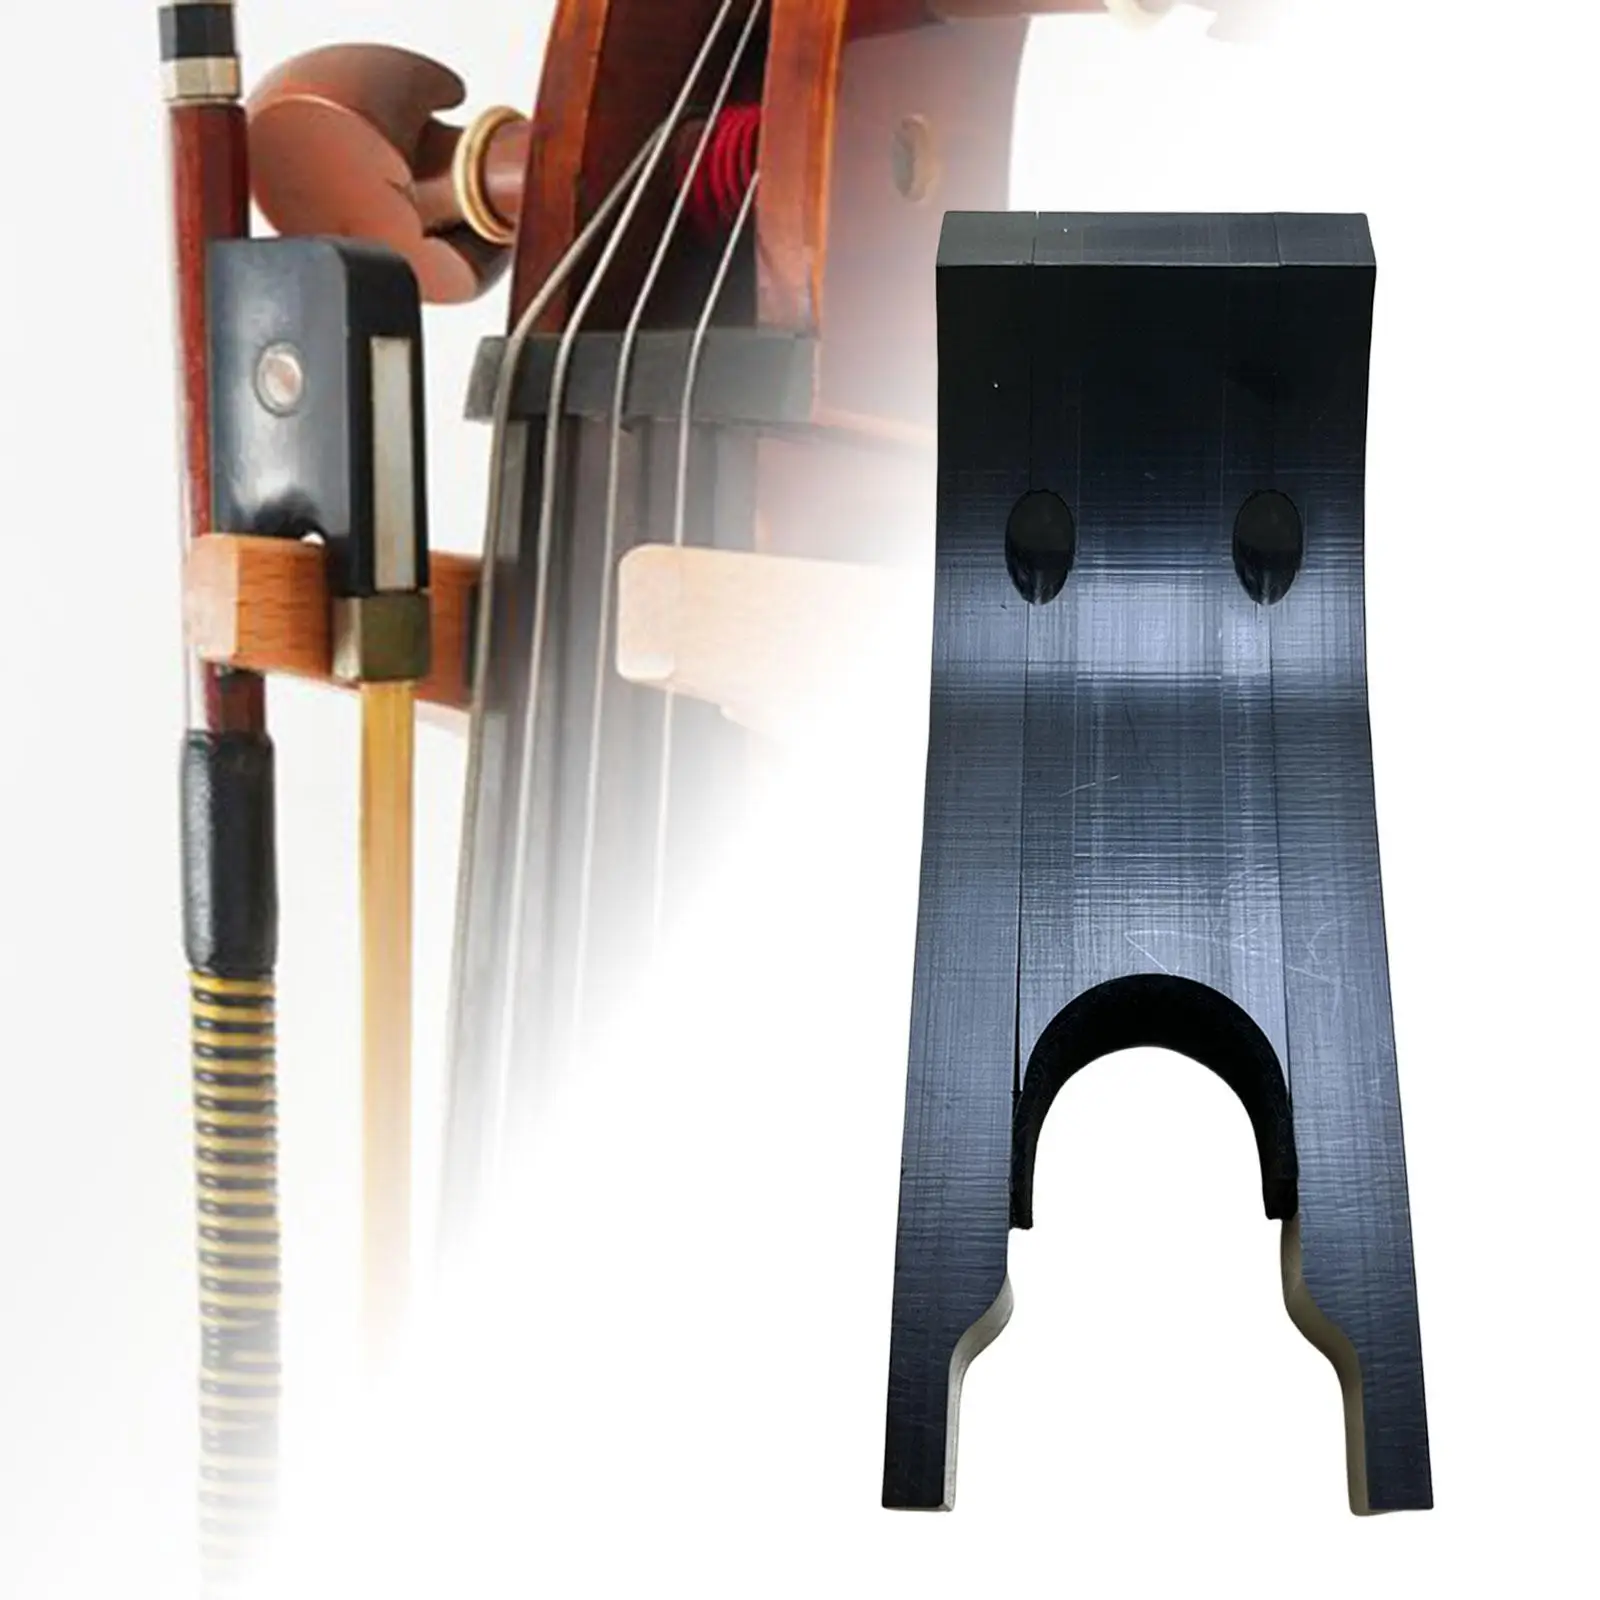 Cello Wall Mount Hanger East to Install Hanger Bracket Cello Holder Hook Cello Player Home Gift Studio String Instrument